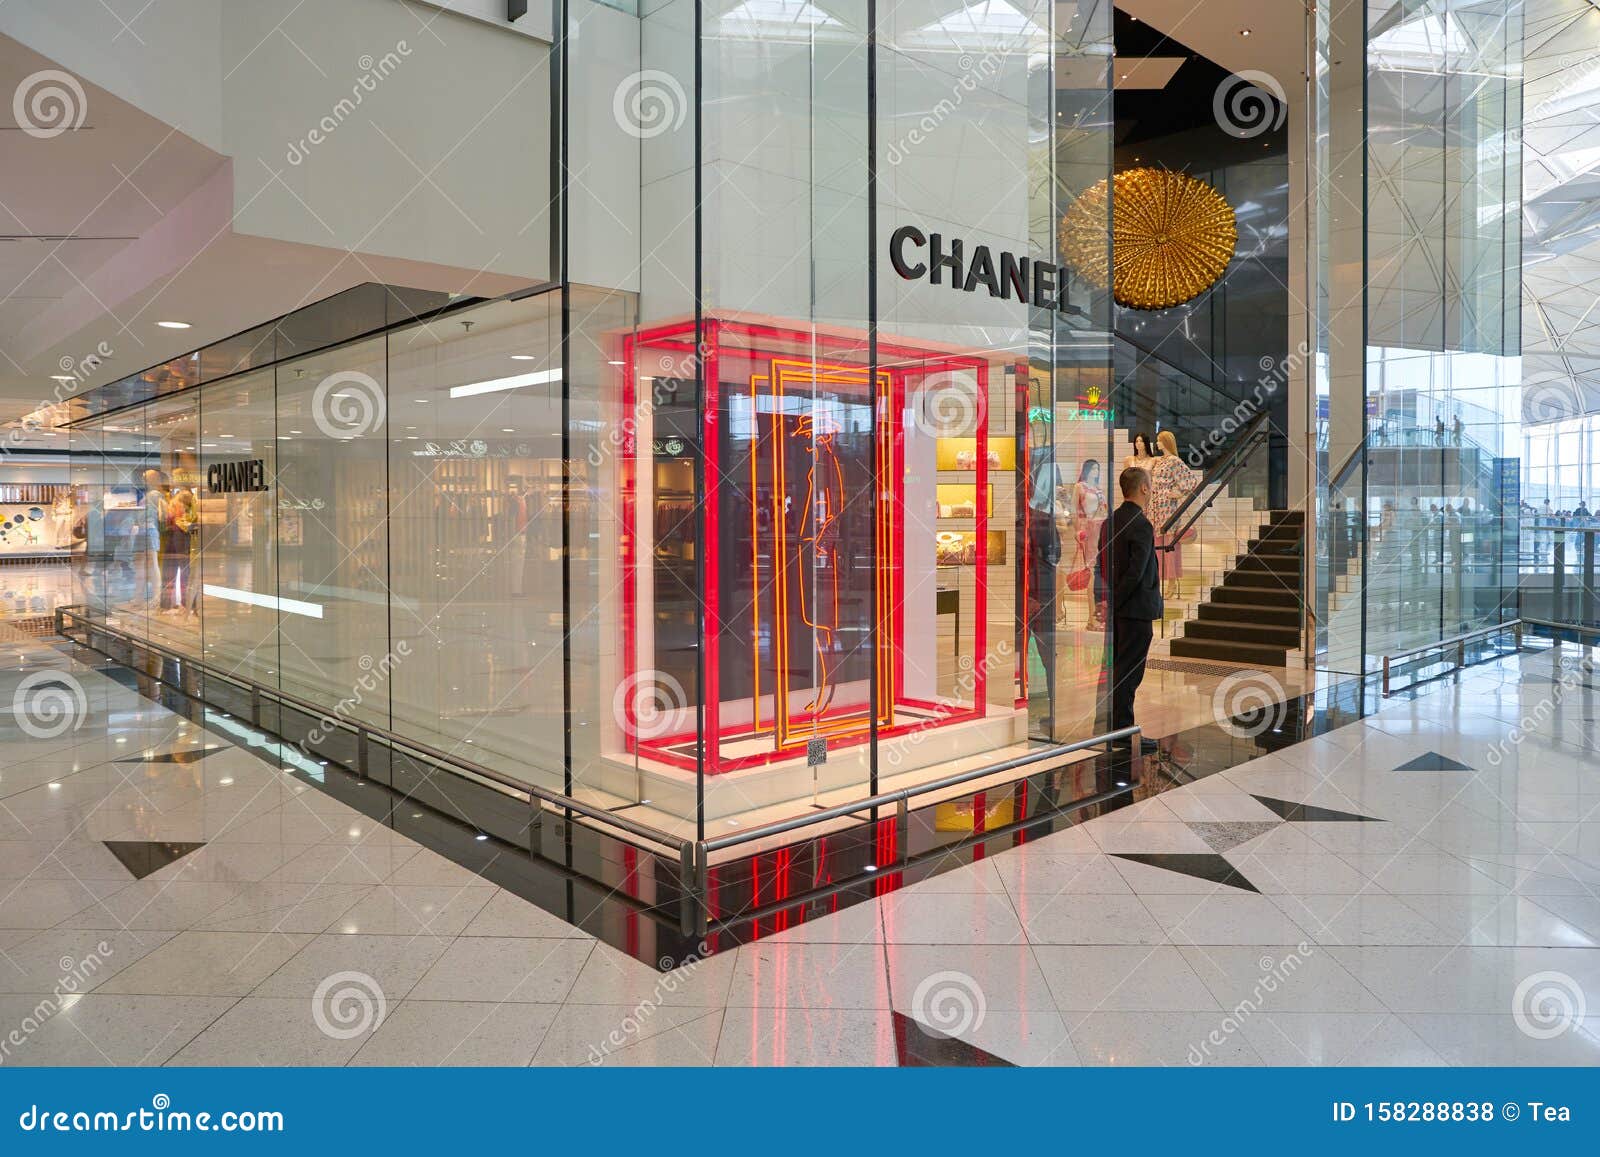 Chanel opens new twostorey boutique at Hong Kong International Airport   The Moodie Davitt Report The Moodie Davitt Report